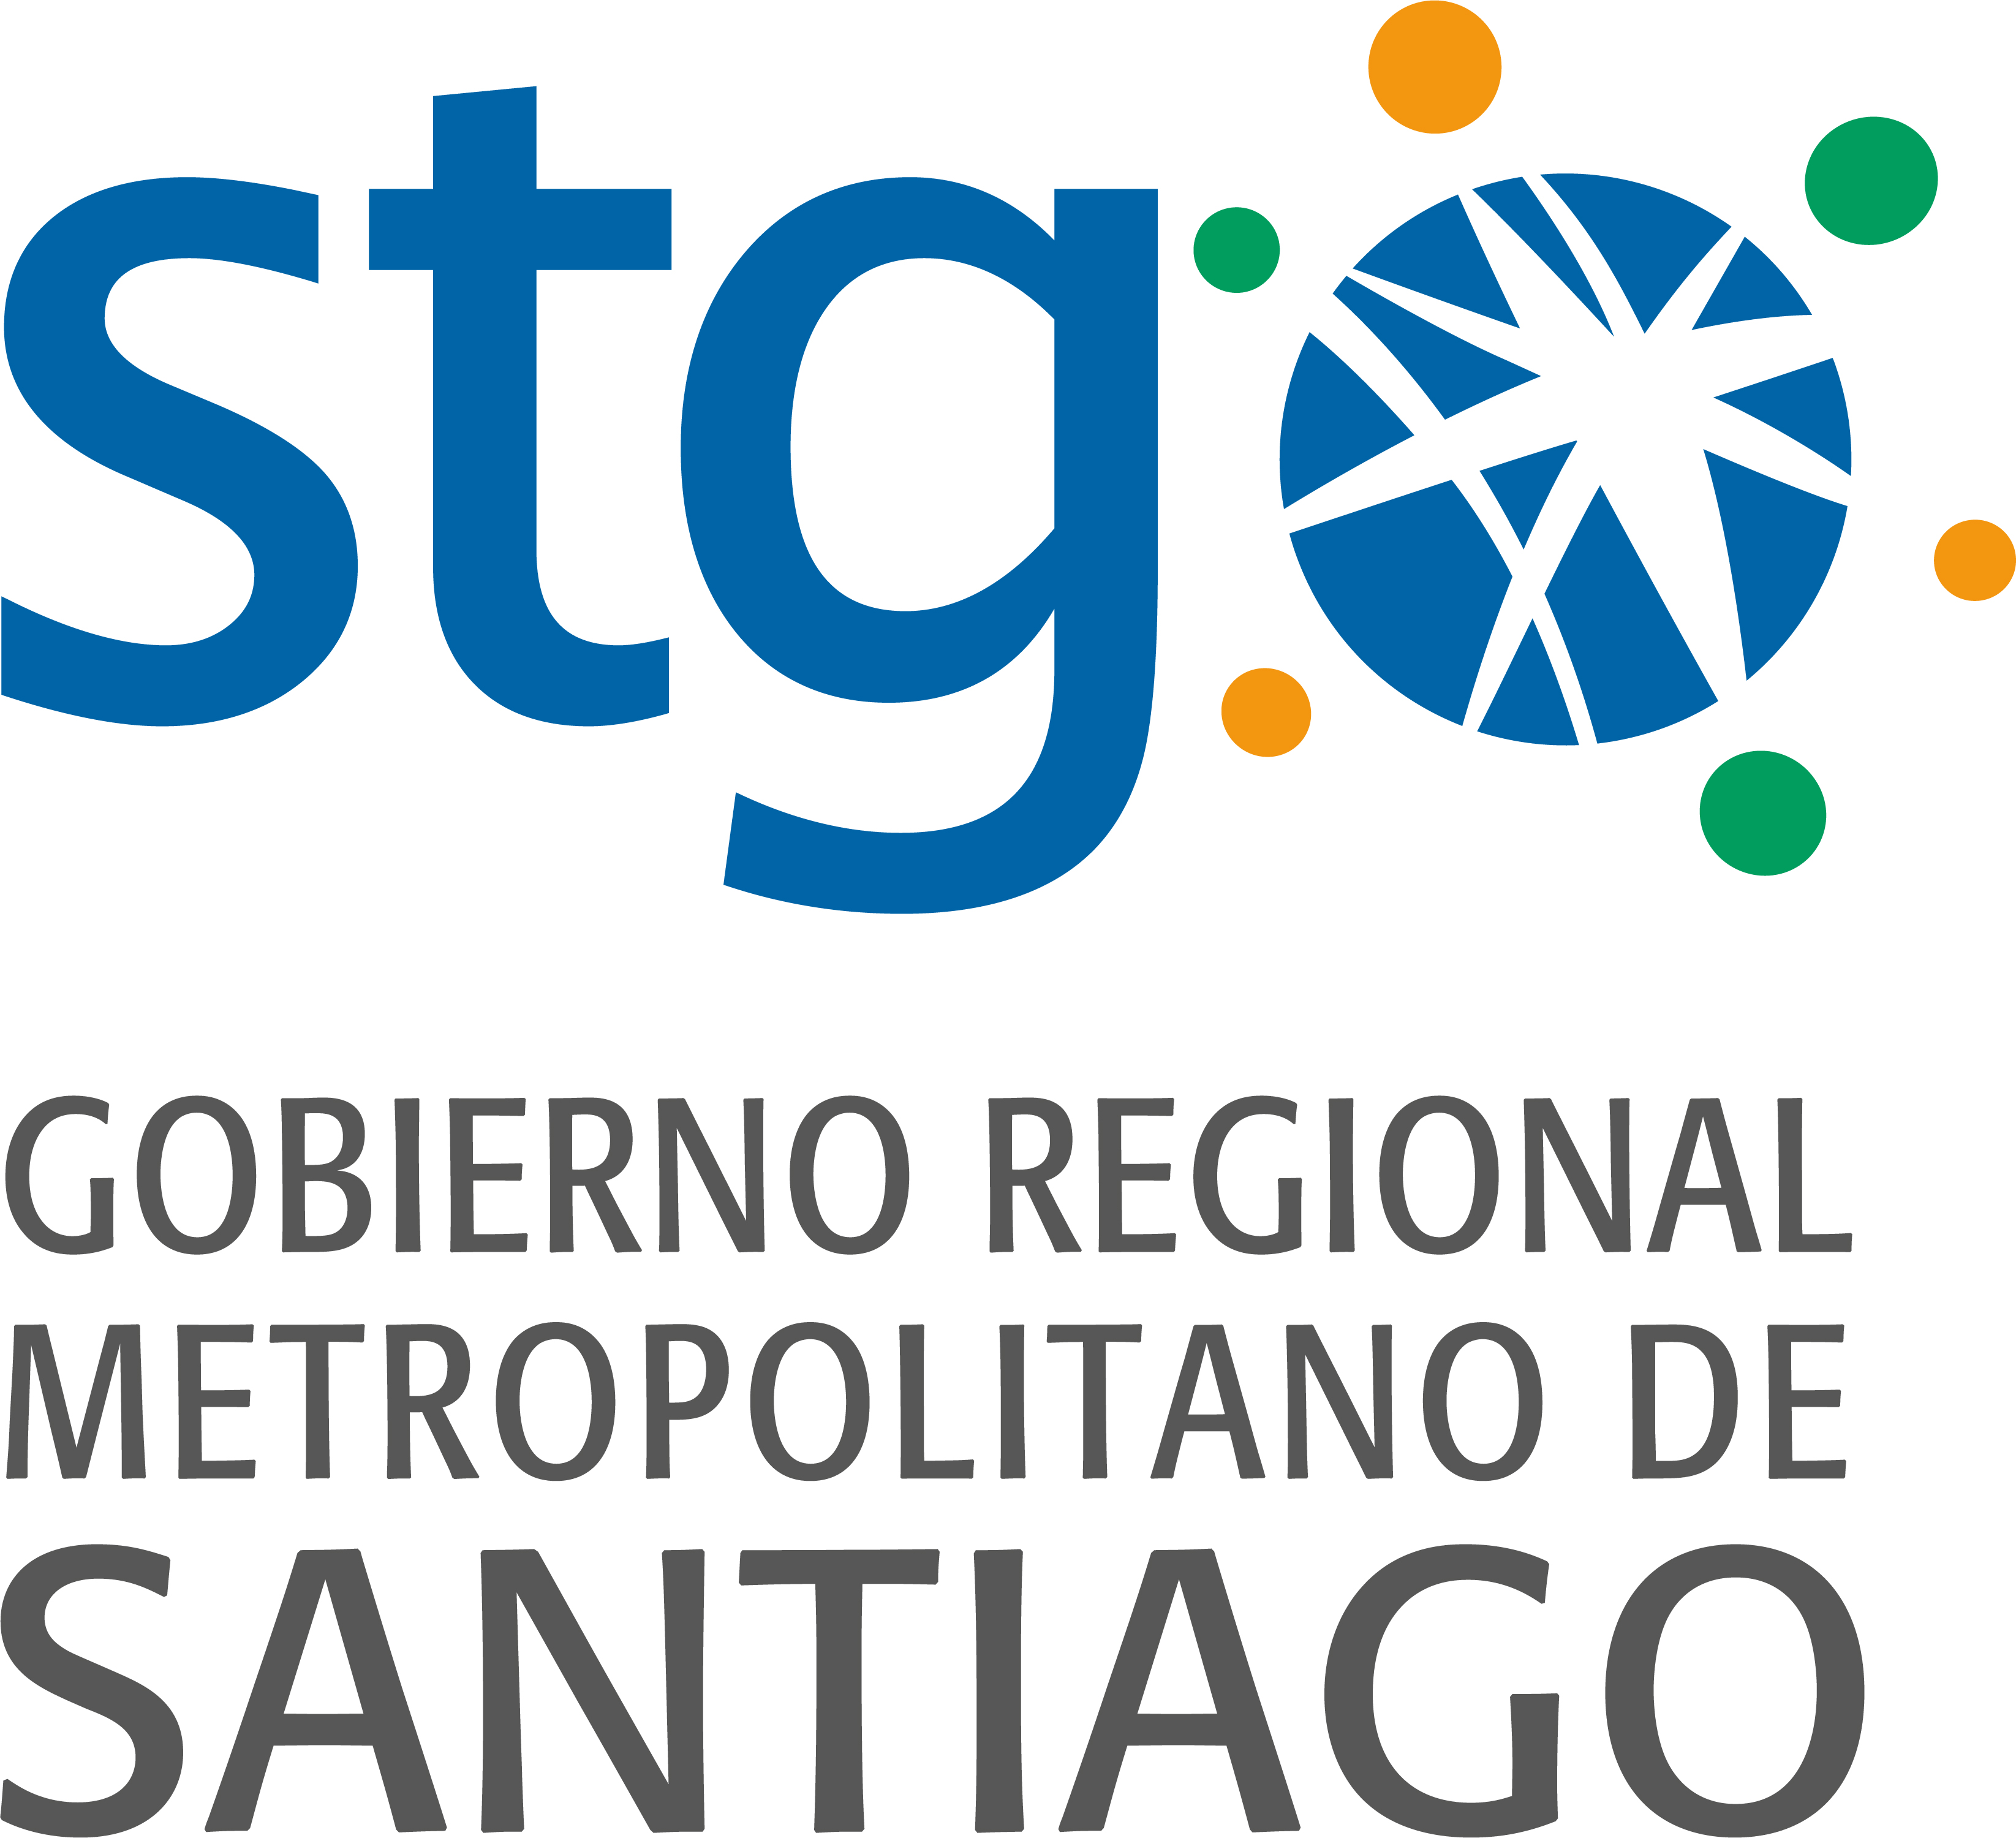 Metropolitan Regional Goverment of Santiago, Chile